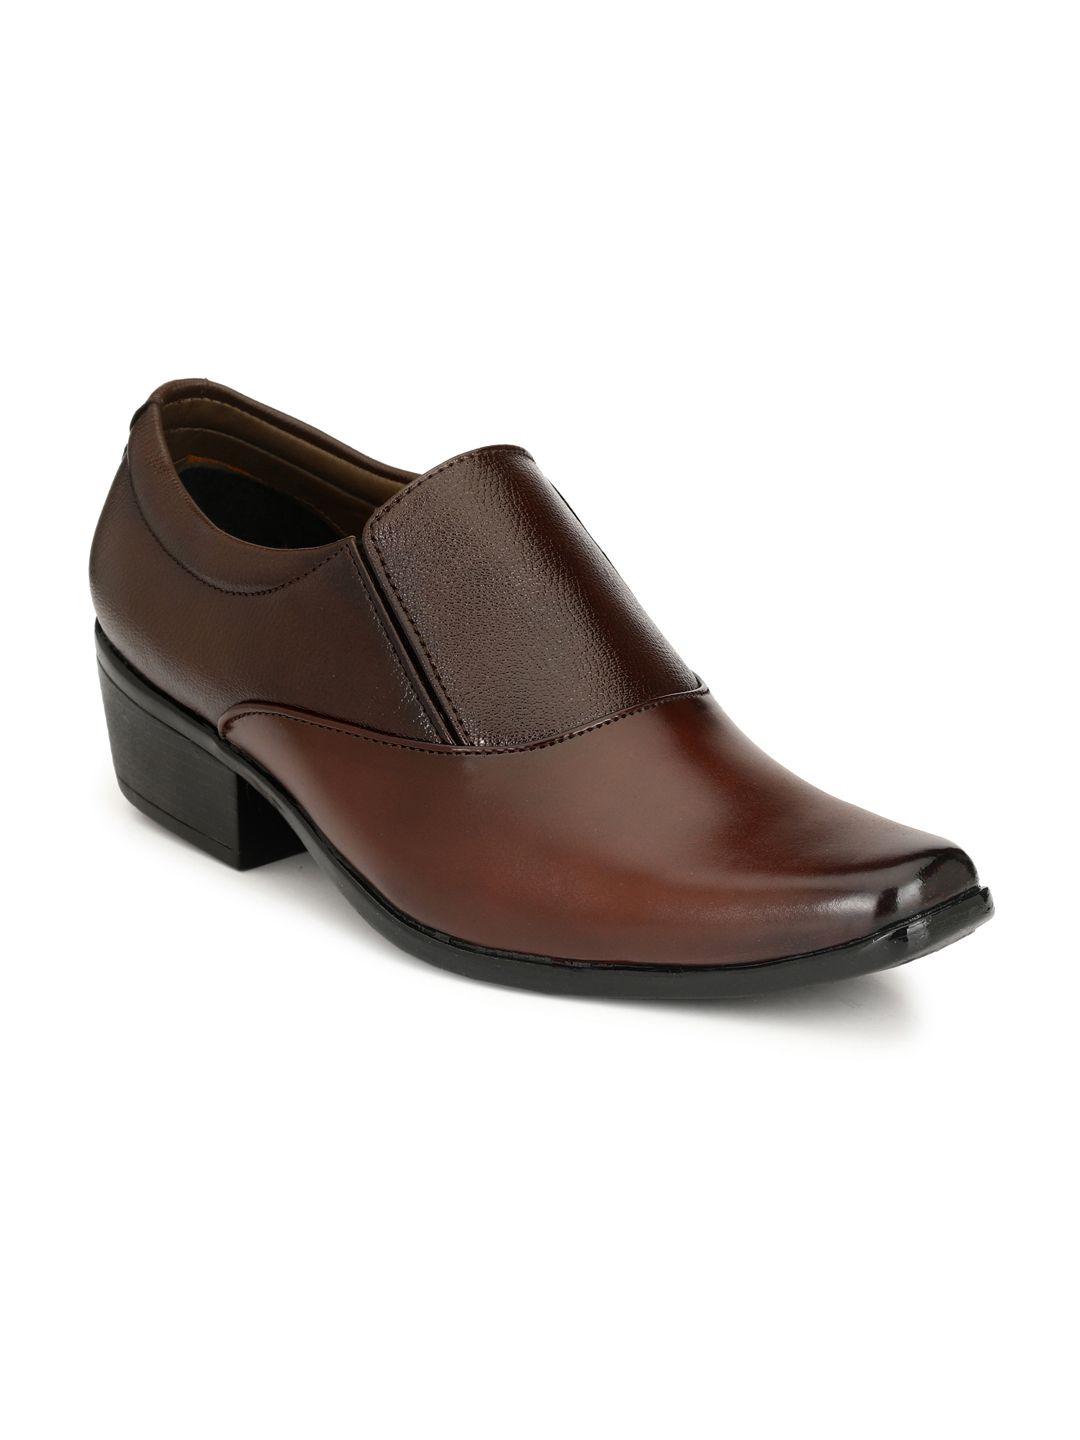 sir corbett men brown formal shoes